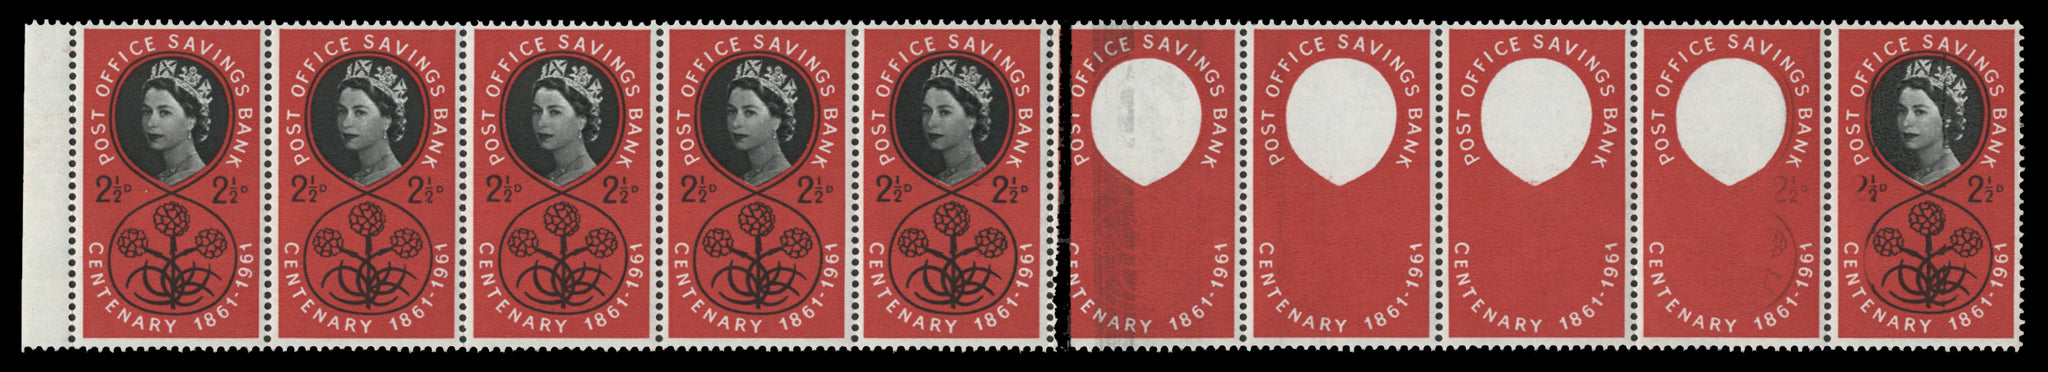 Great Britain 1961 2½d Centenary of Post Office Savings Bank strip missing black